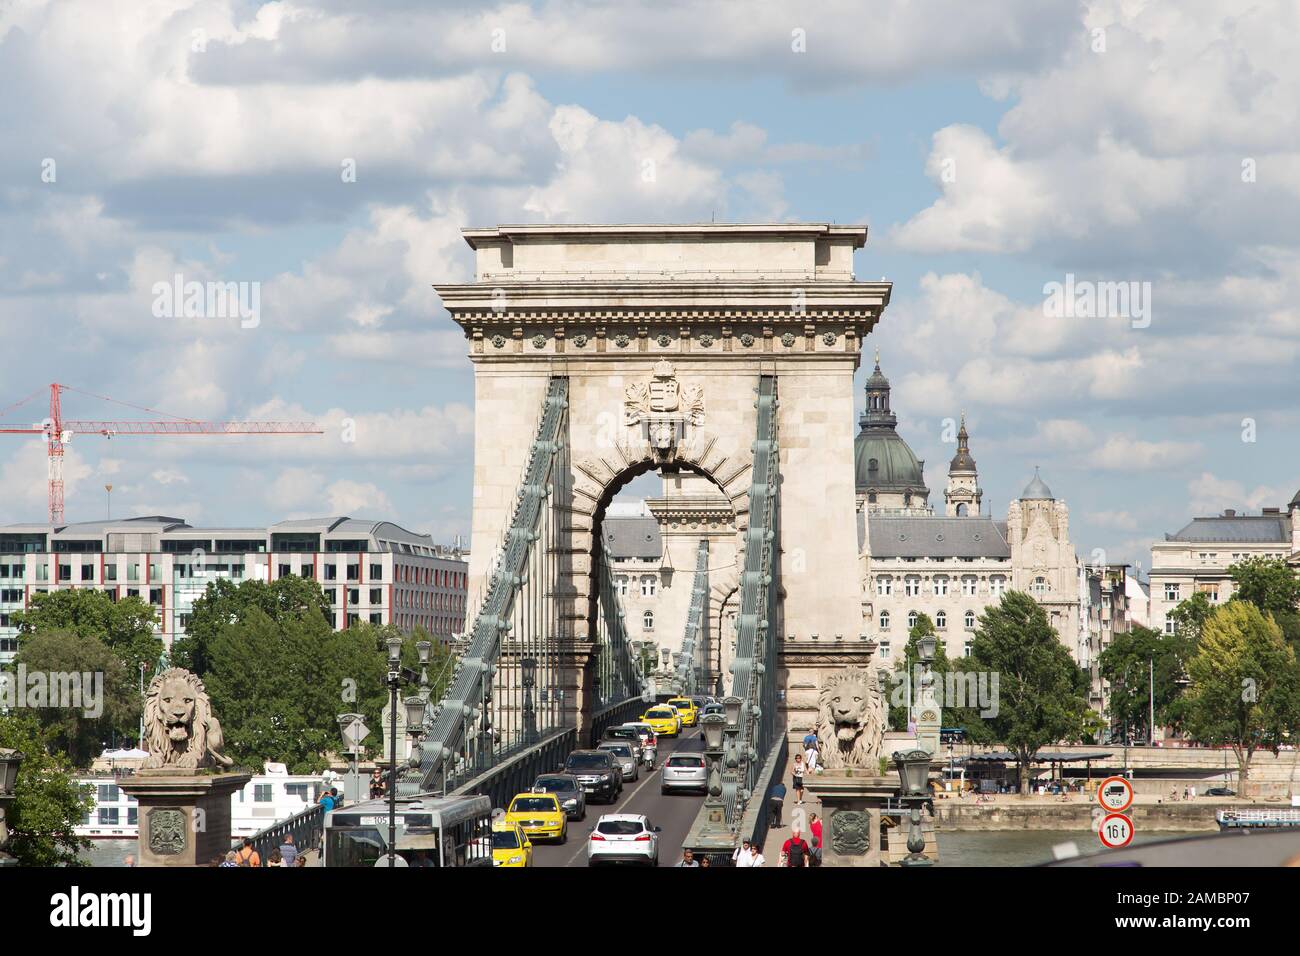 szechenyi Chain Bridge Budapest Hungary Stock Photo